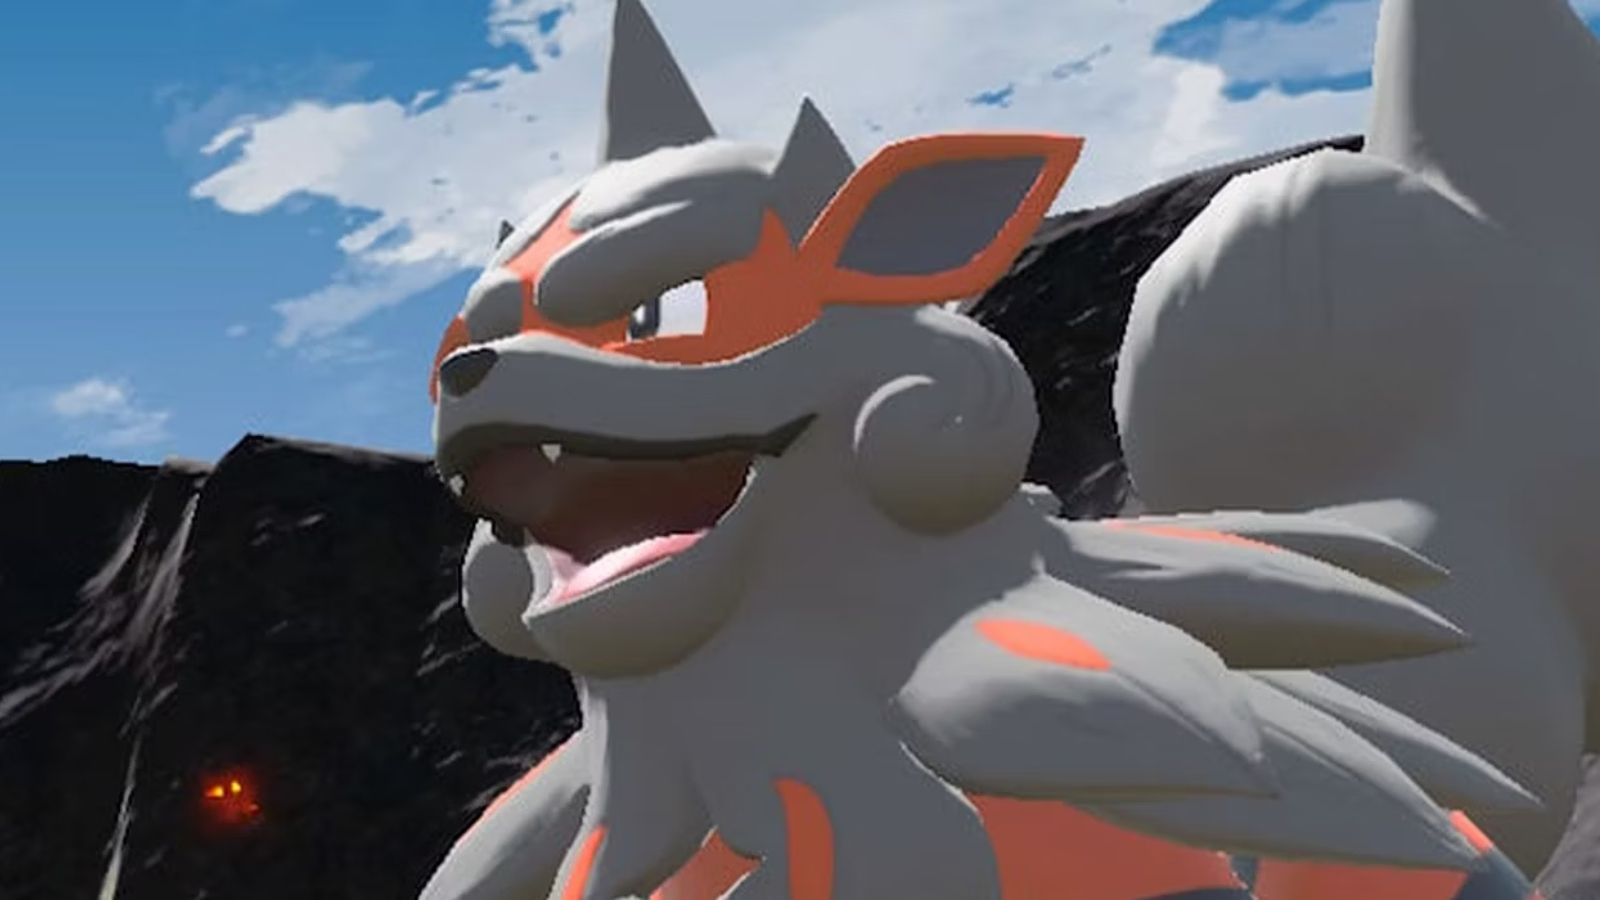 Competitivo 101: Como prometido, hoje teremos os Pokémon tipo fantasma e  venenoso - Nintendo Blast